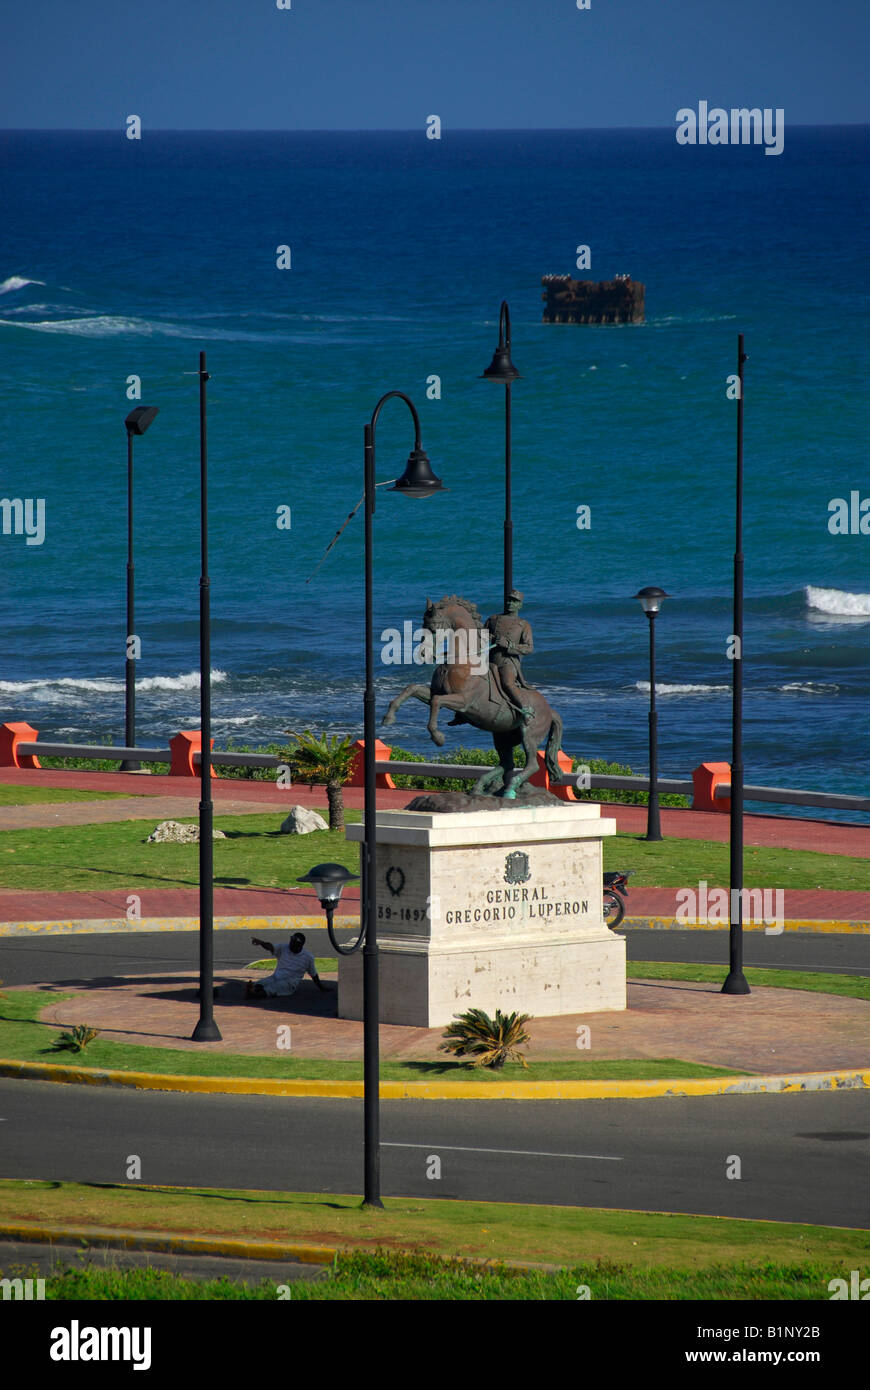 Malecon puerto plata fotografías e imágenes de alta resolución - Alamy